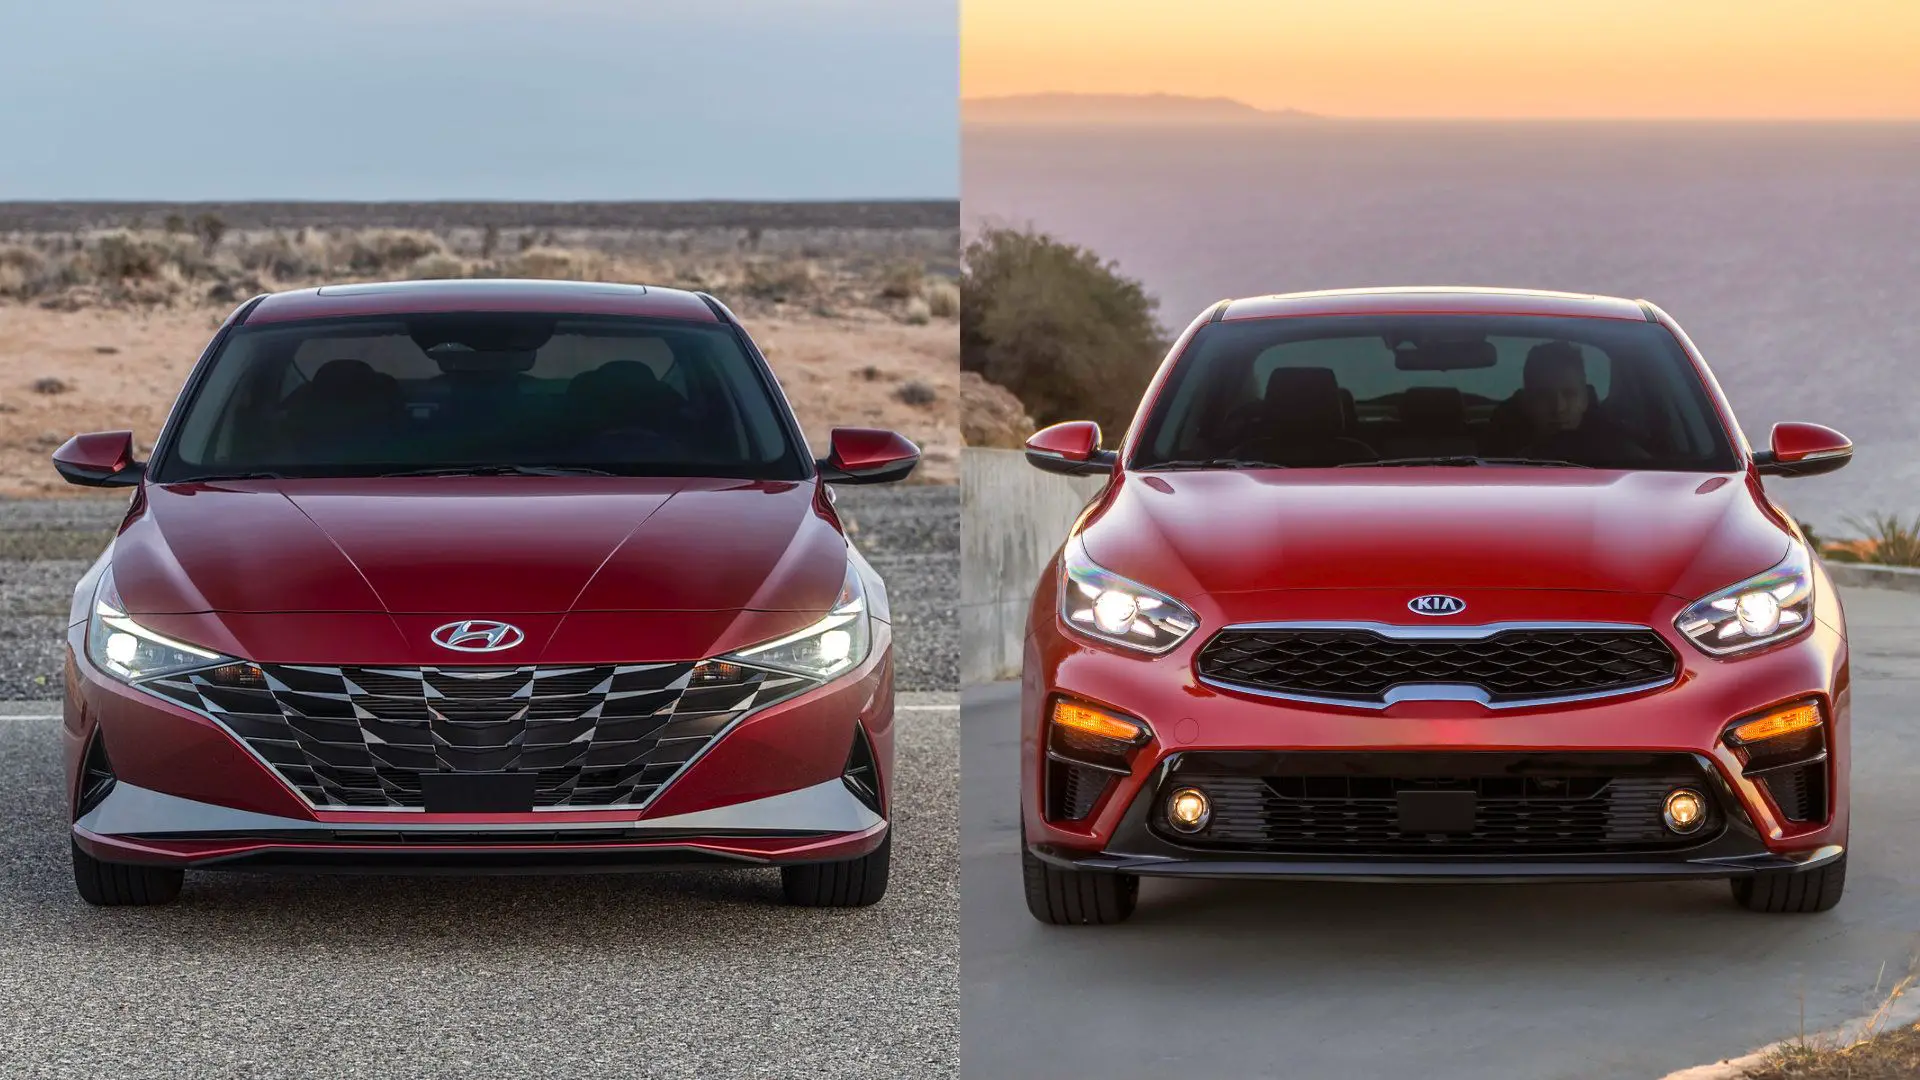 Hyundai Elantra vs Kia Forte comparison